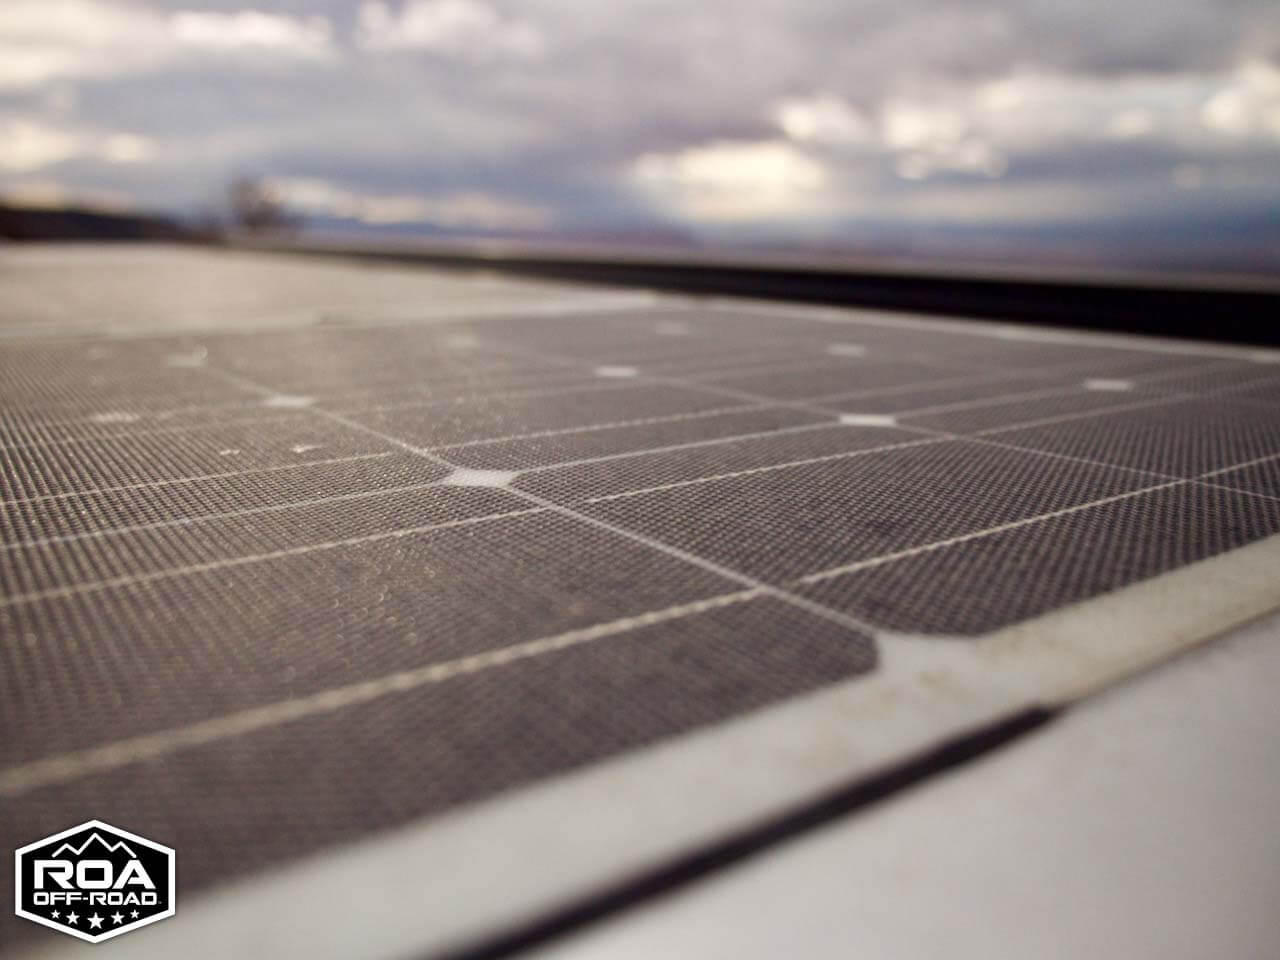 Roof Top Solar Panels